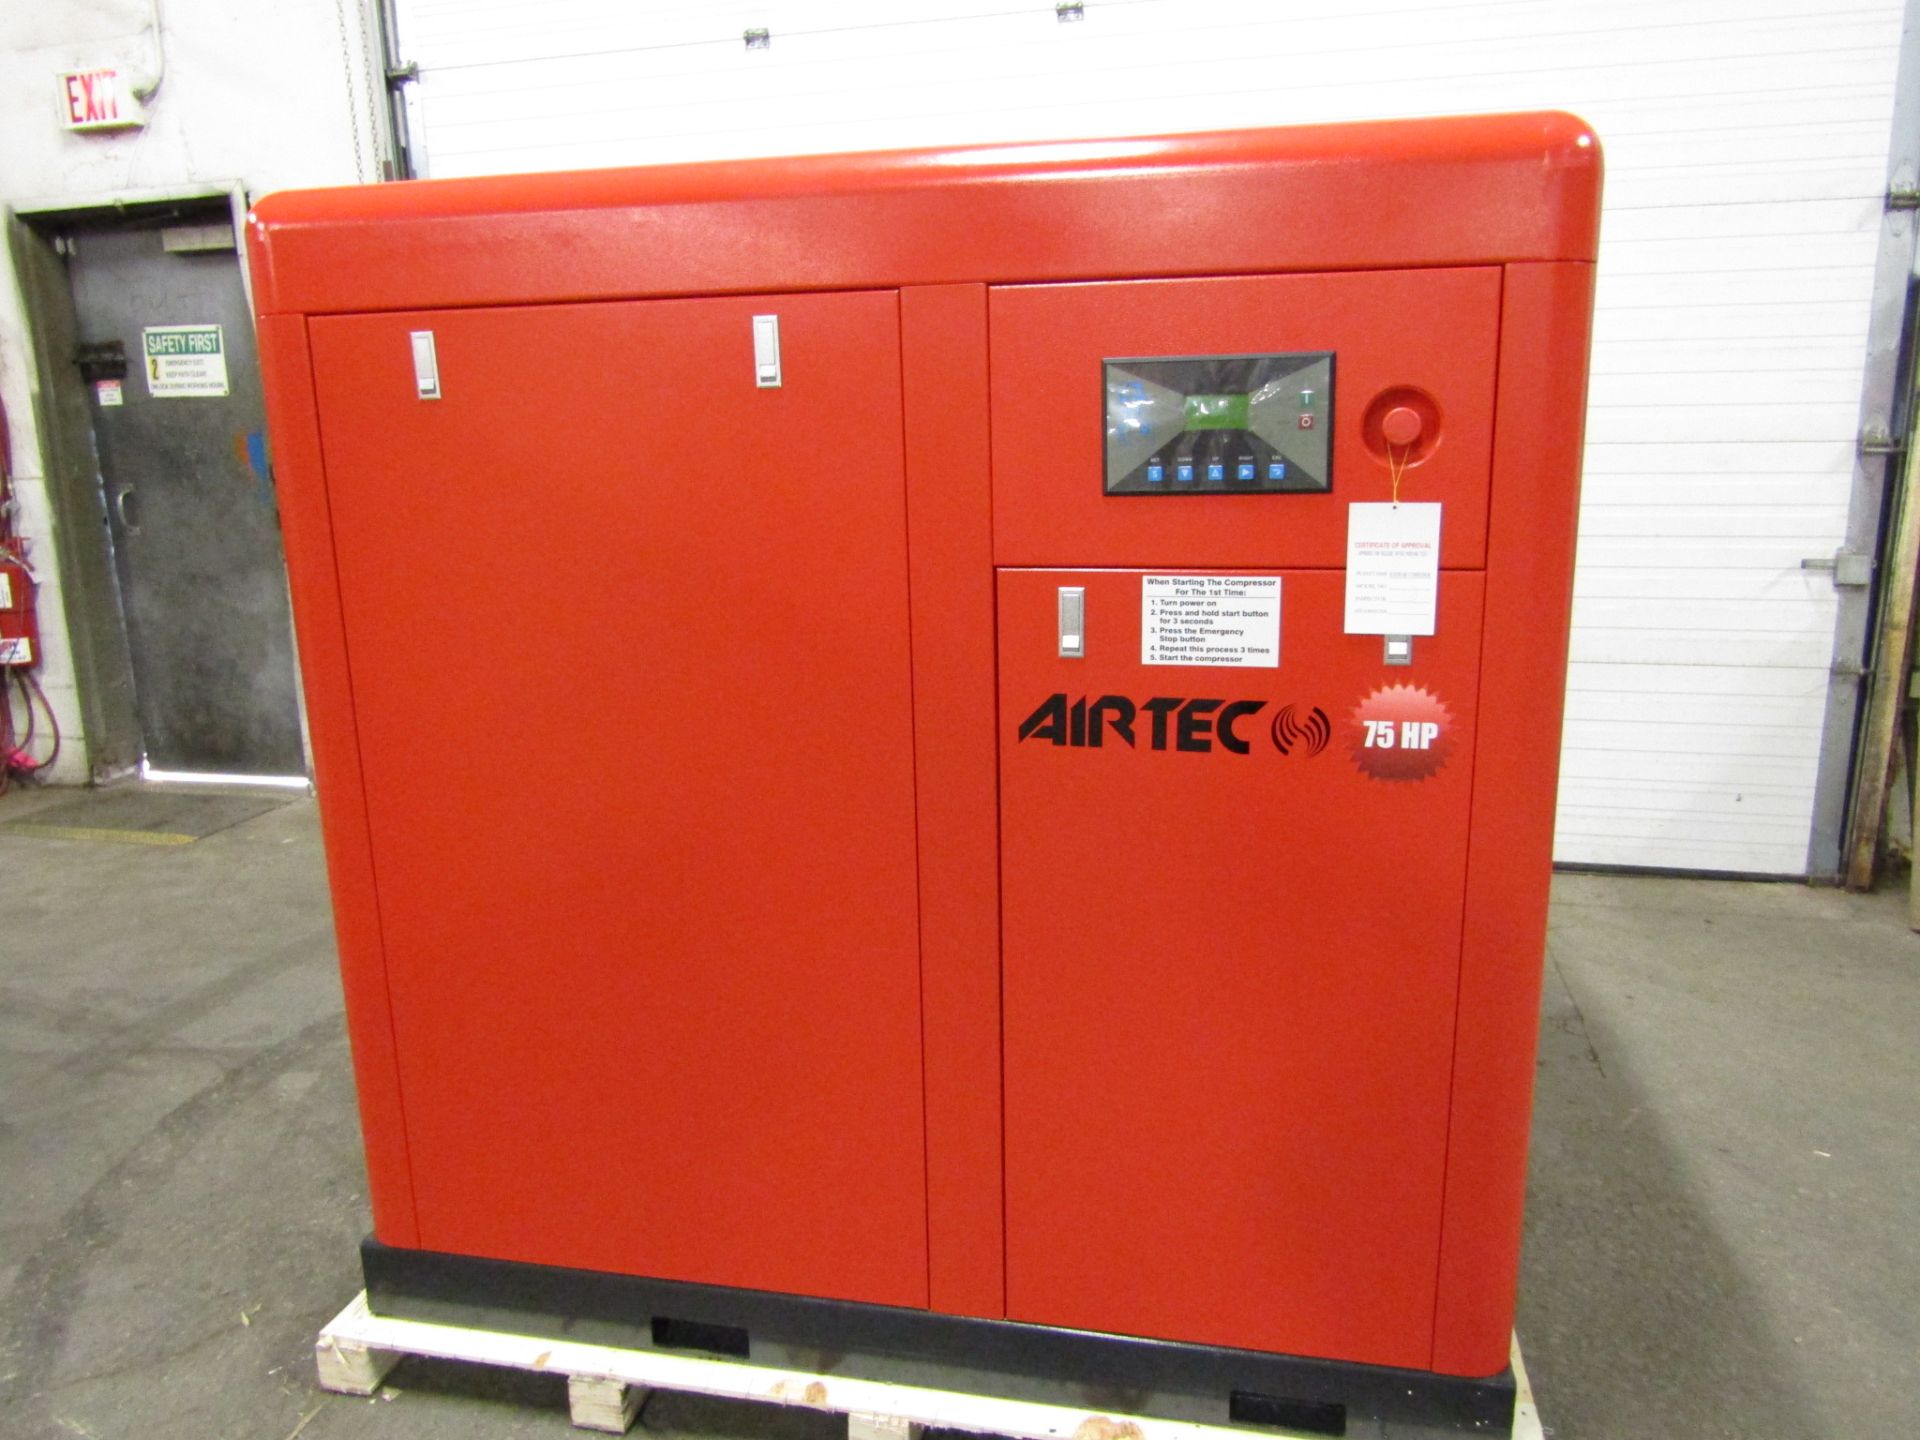 Airtec 75HP Rotary Screw Air Compressor - MINT UNUSED COMPRESSOR